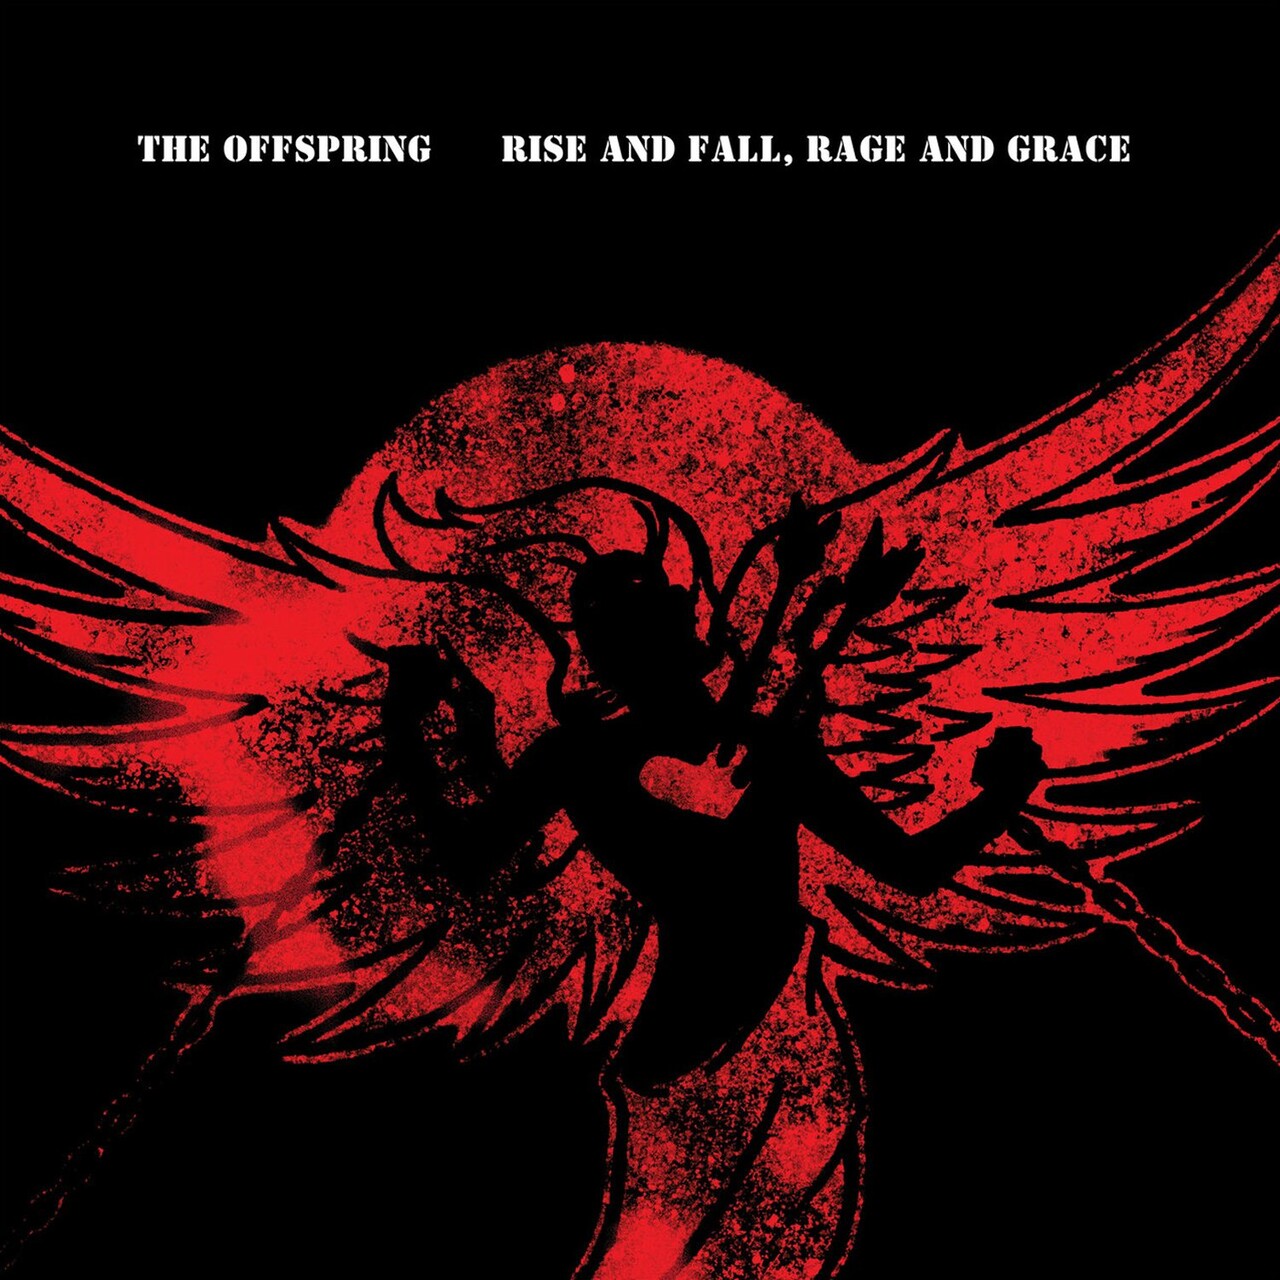 Рок Universal (Aus) Offspring, The - Rise And Fall, Rage And Grace (Black Vinyl LP) гарнитура для пк takstar rise